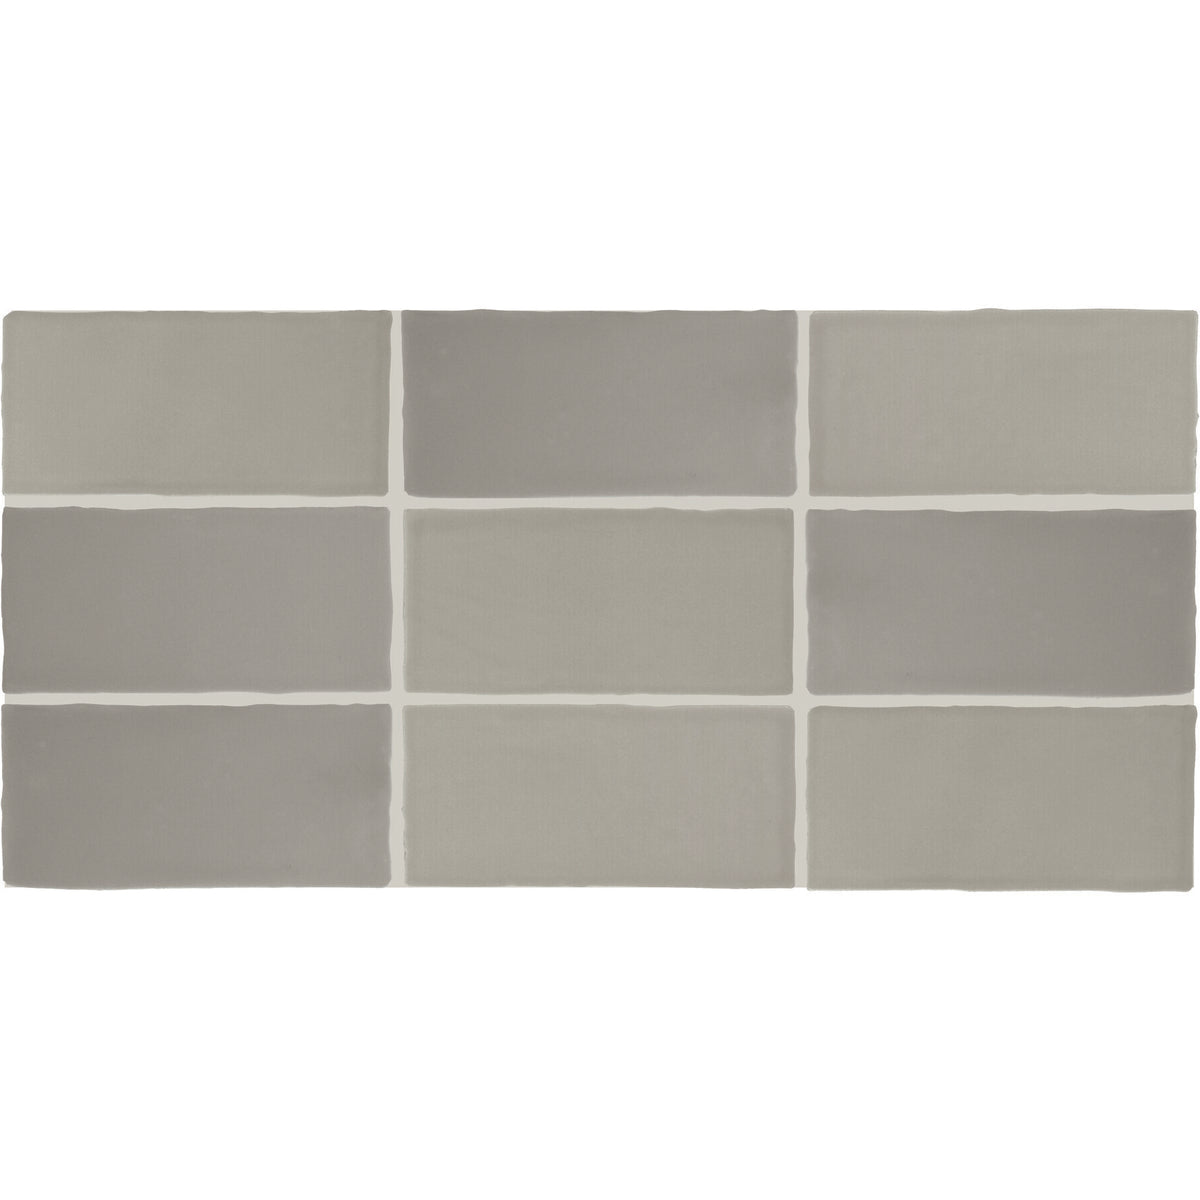 Daltile - Farrier - 2.5 in. x 5 in. Glazed Ceramic Wall Tile - Dartmoor Grey Variation View